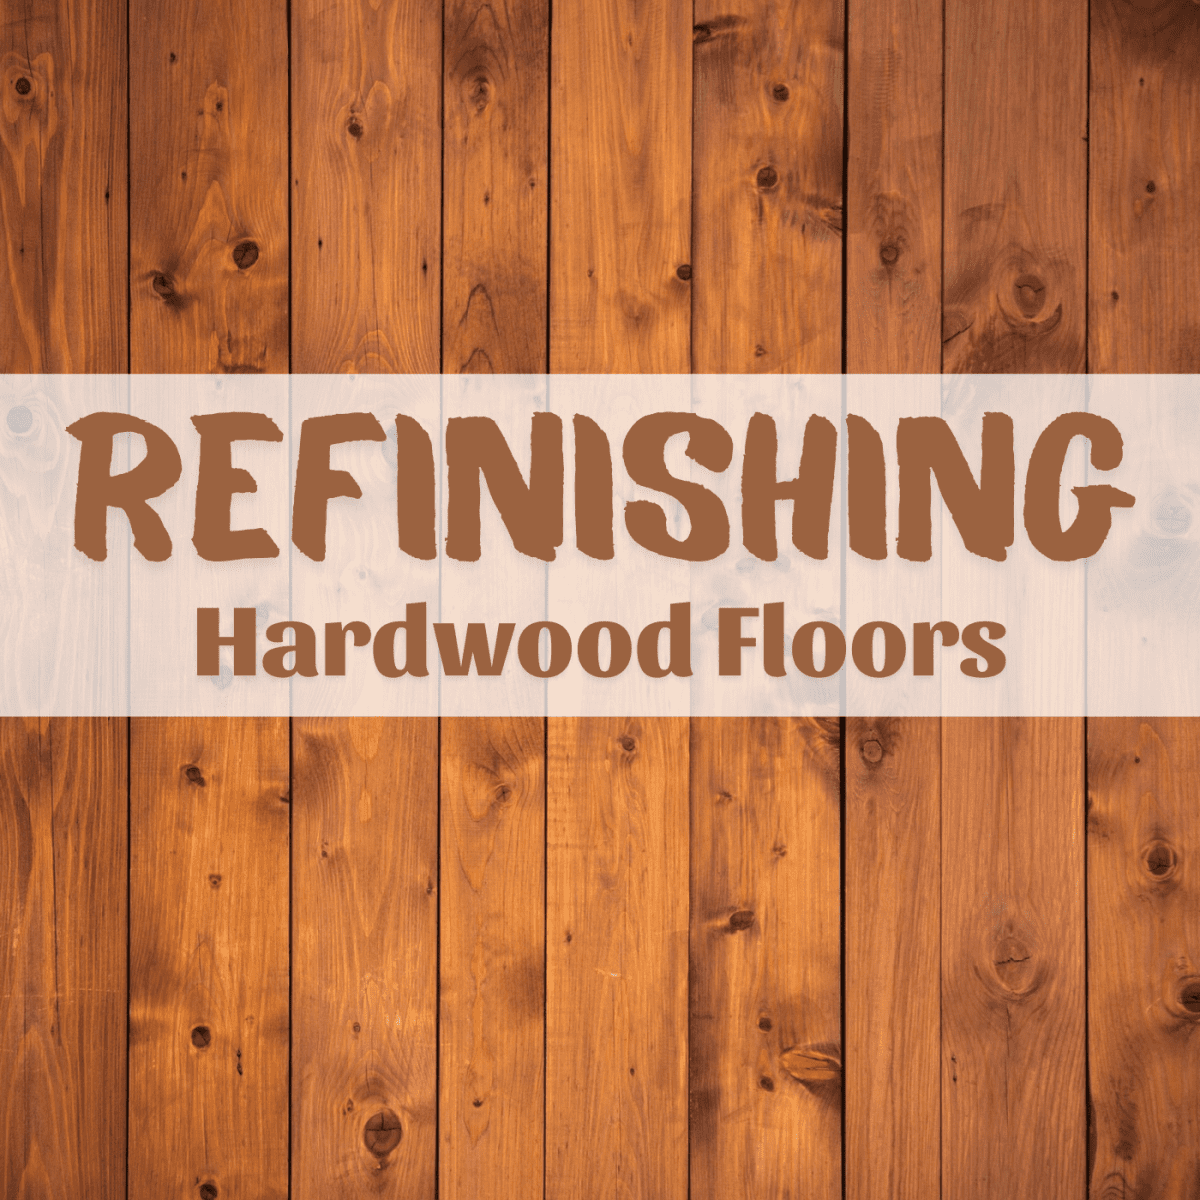 How To Refinish A Hardwood Floor, How To Remove Broken Staples From Hardwood Floors